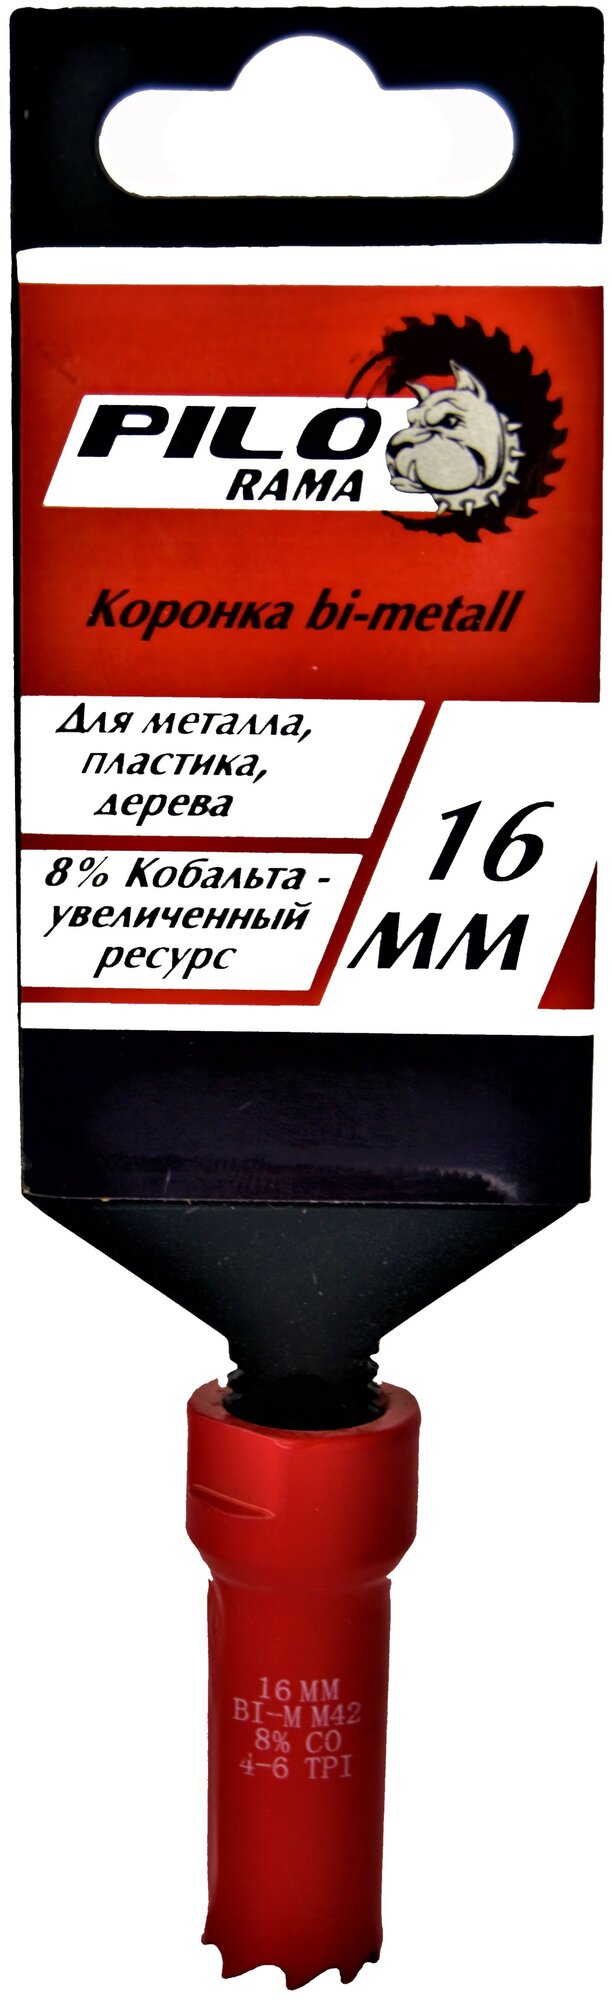 Коронка Bi-Metall 8%Co. 16мм "Pilorama" (1/25шт) 570016